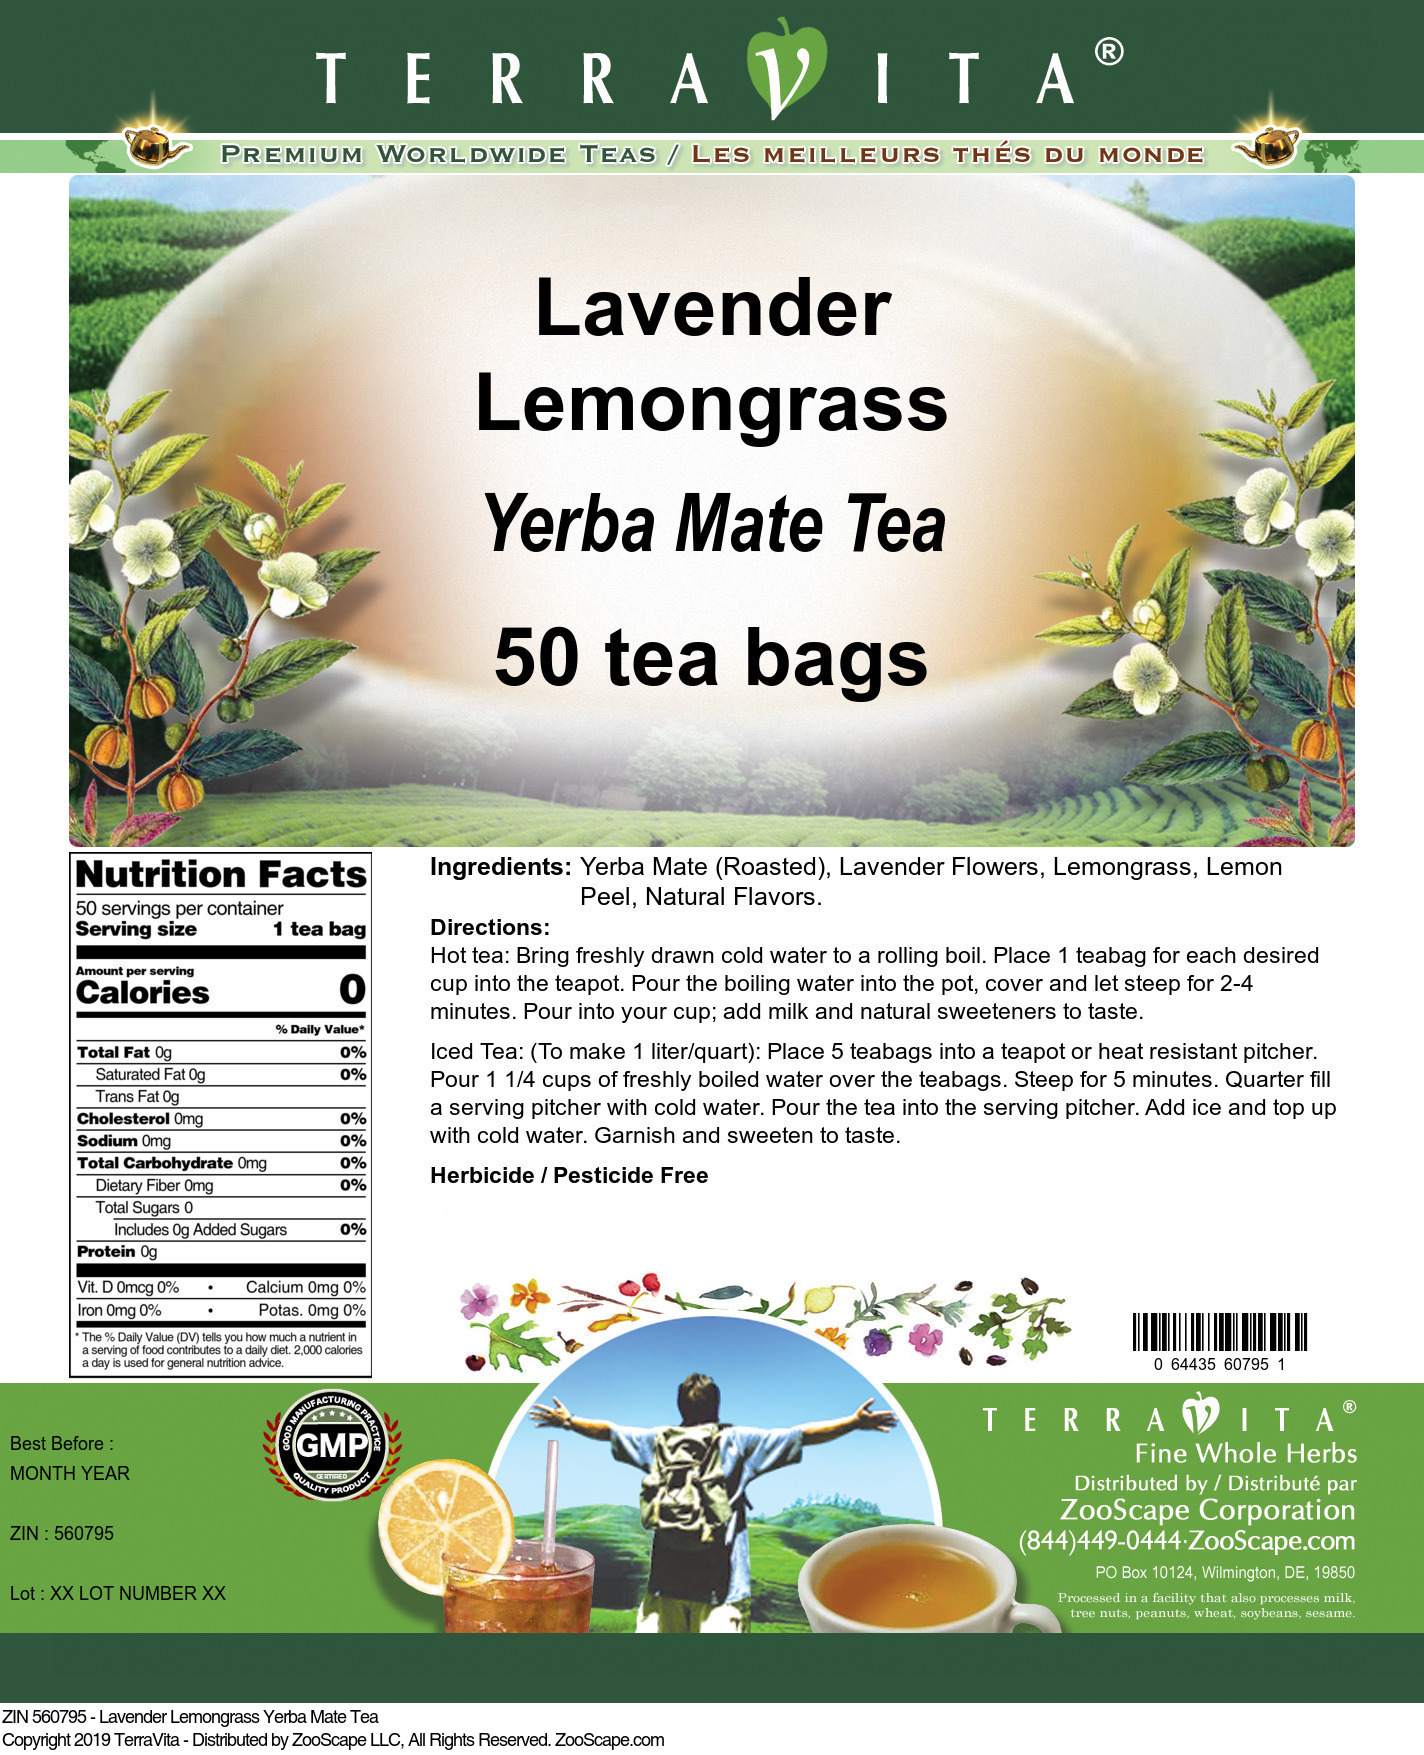 Lavender Lemongrass Yerba Mate Tea - Label